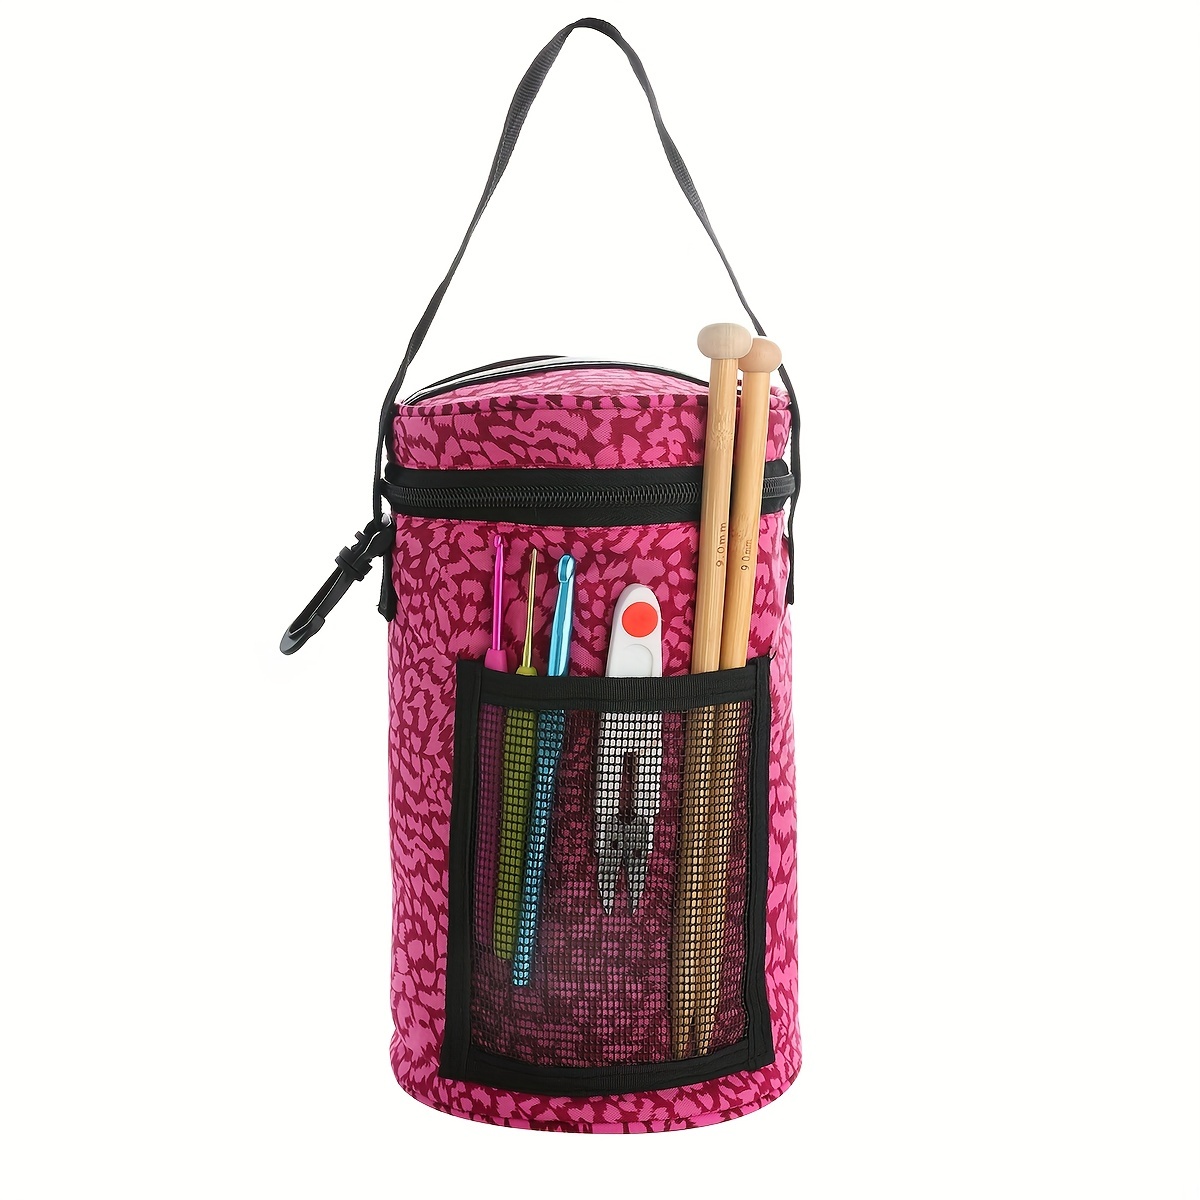 1pc Empty Knitting Circular Needles Case Travel Storage Organizer Double  Zipper Compartment Storage Bag Sewing Accessories - Diy Apparel &  Needlework Storage - AliExpress